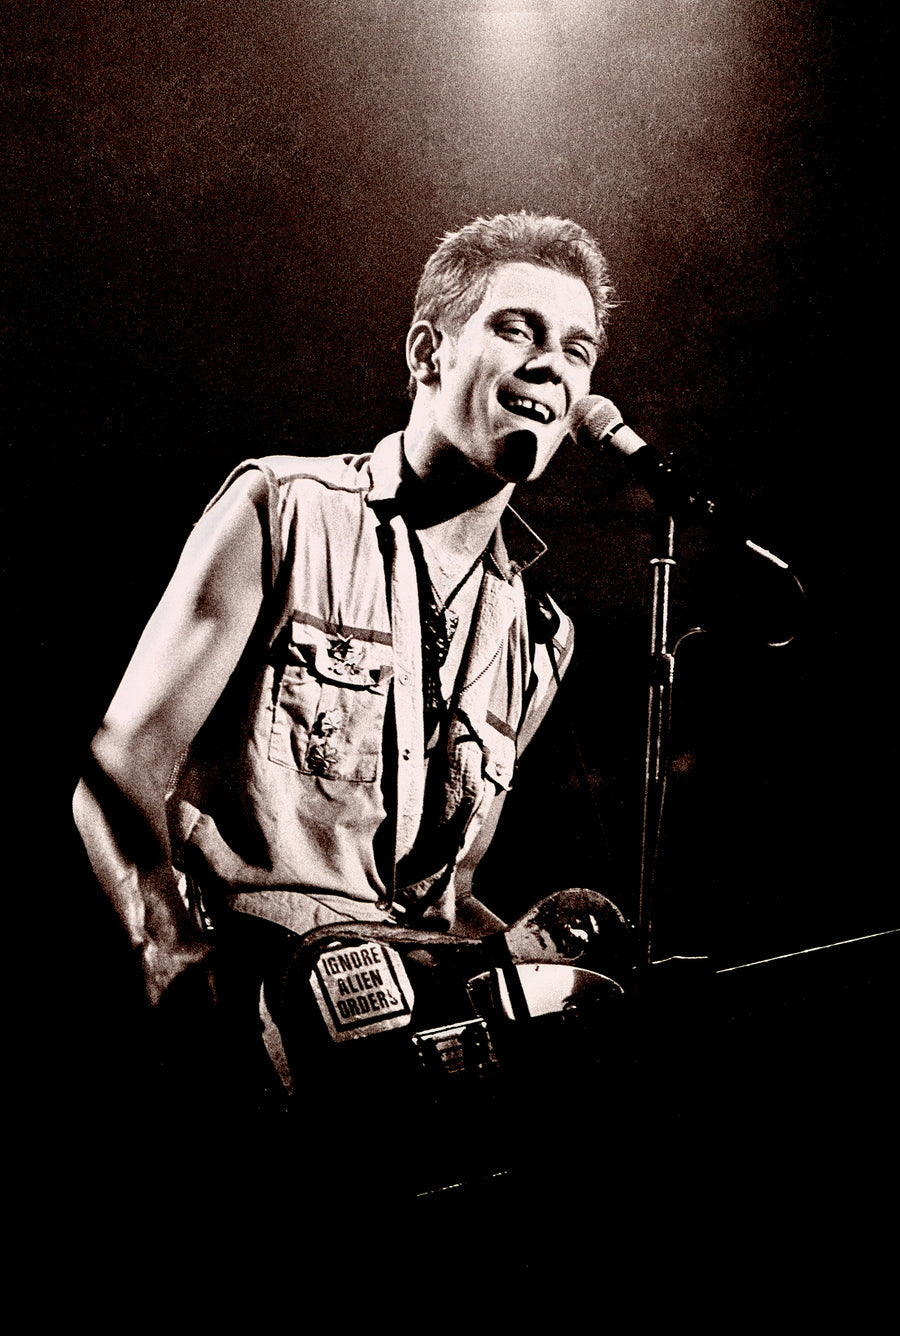 Steve Rapport "Paul Simonon of The Clash / Brixton" (1982)